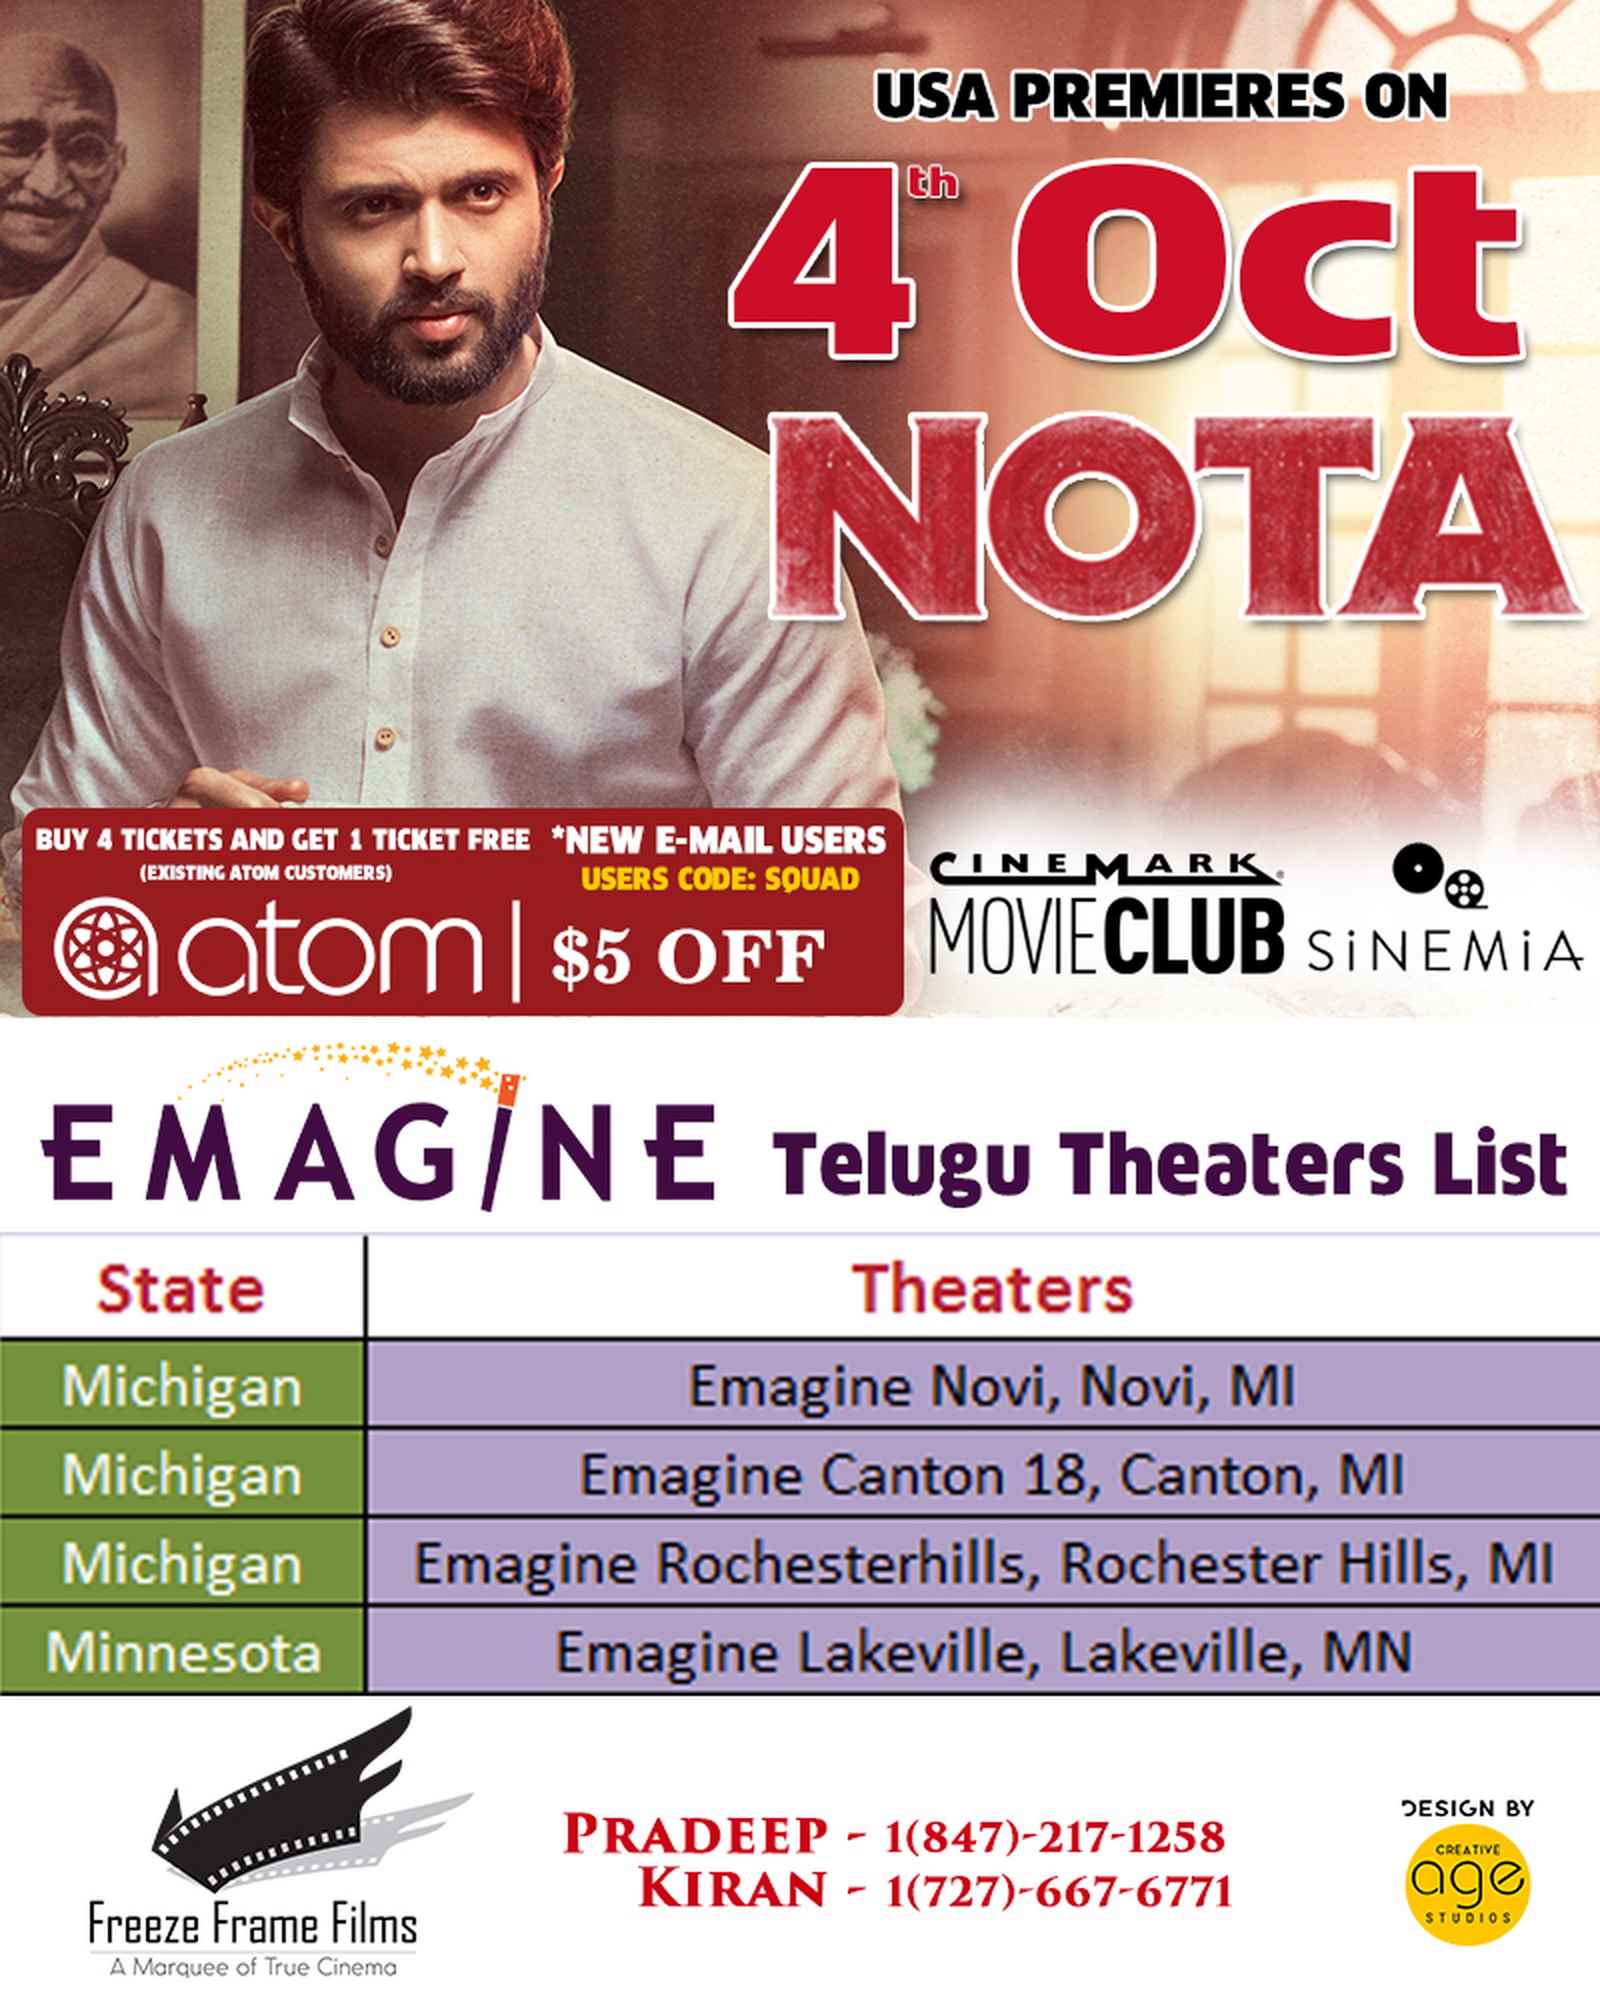 Nota Overseas Theatres List USA (1)